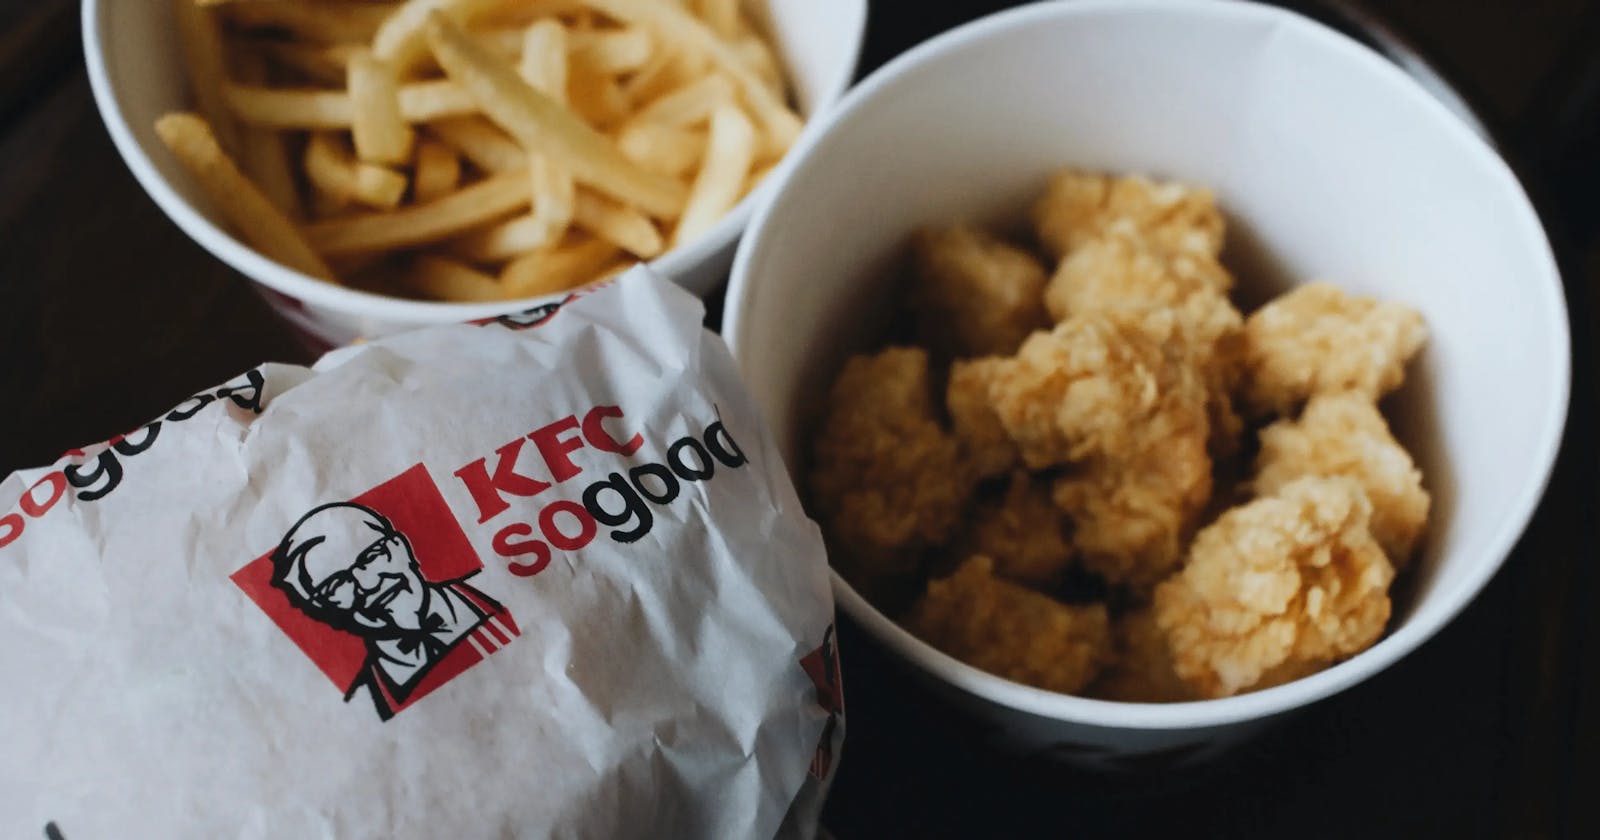 Why the Founder of KFC Sued KFC